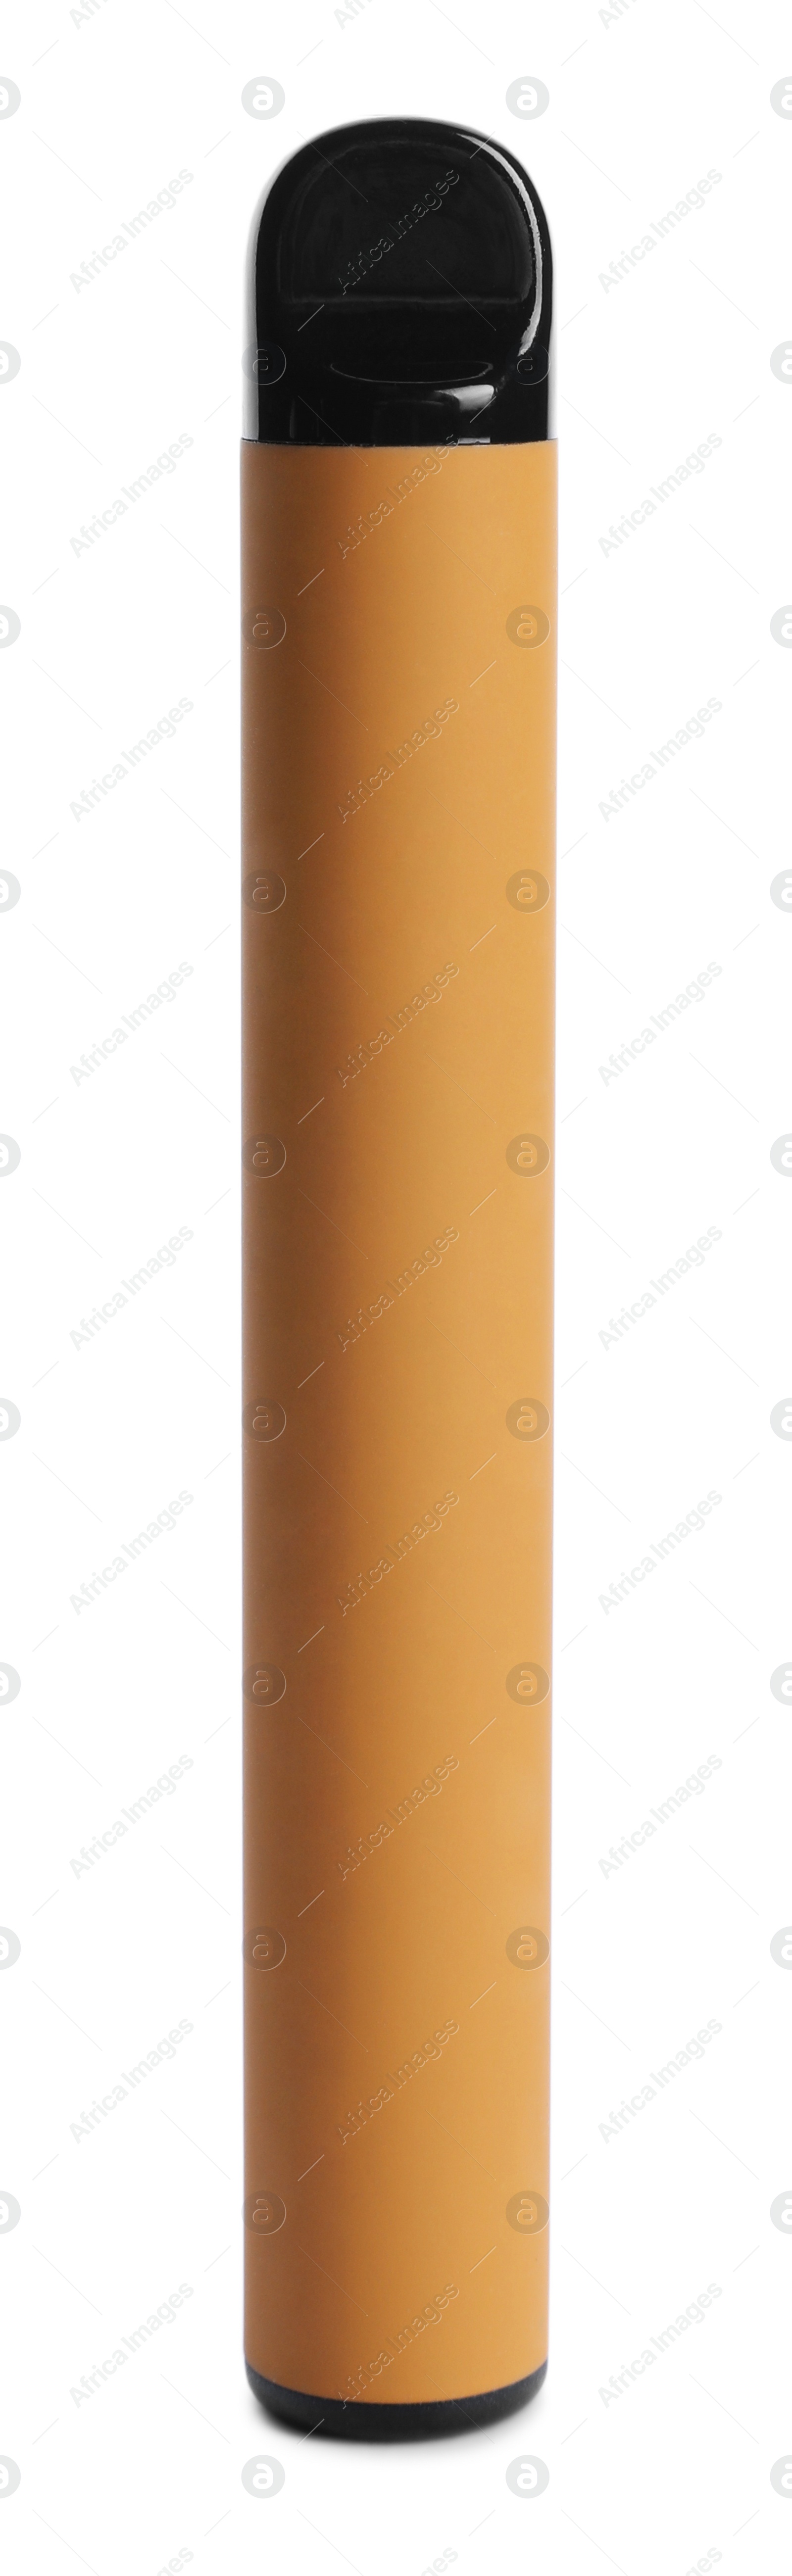 Photo of Orange disposable electronic cigarette isolated on white